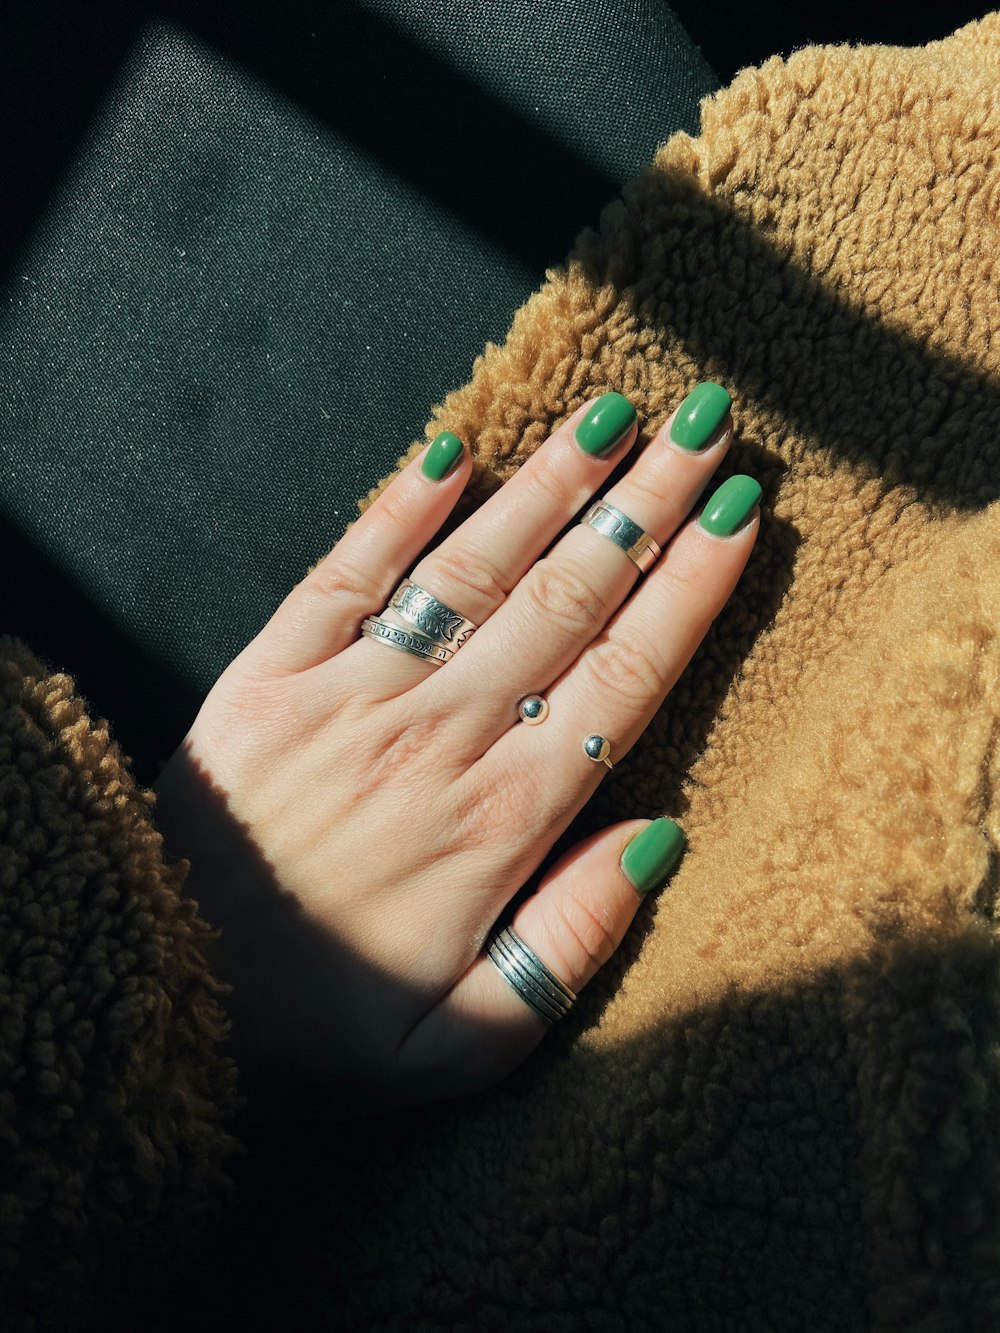 persona que lleva anillo de plata con manicura verde